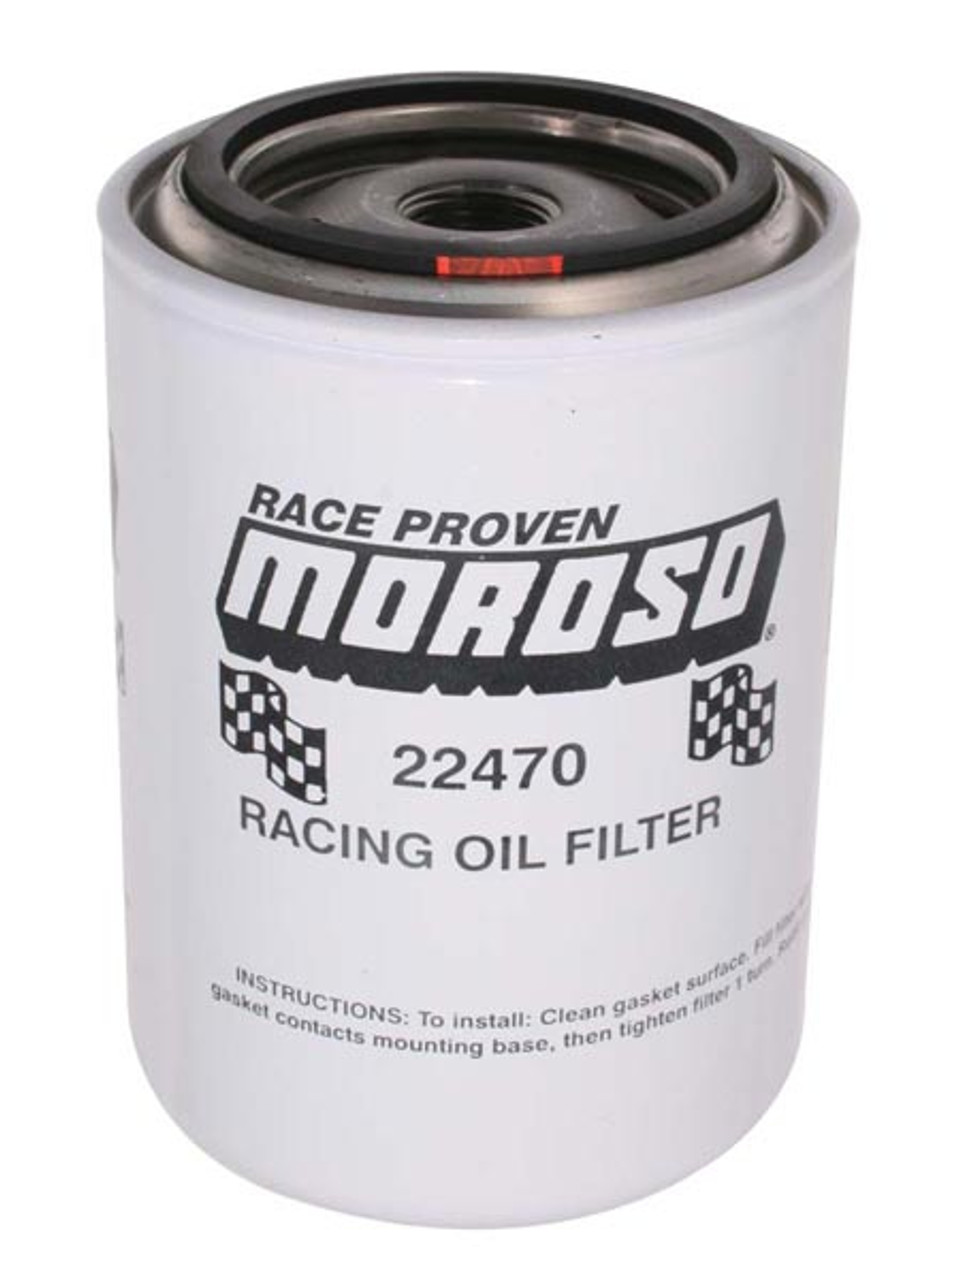 Moroso 22470 Racing Oil Filter - Ford/Chrysler Style -Heavy Duty